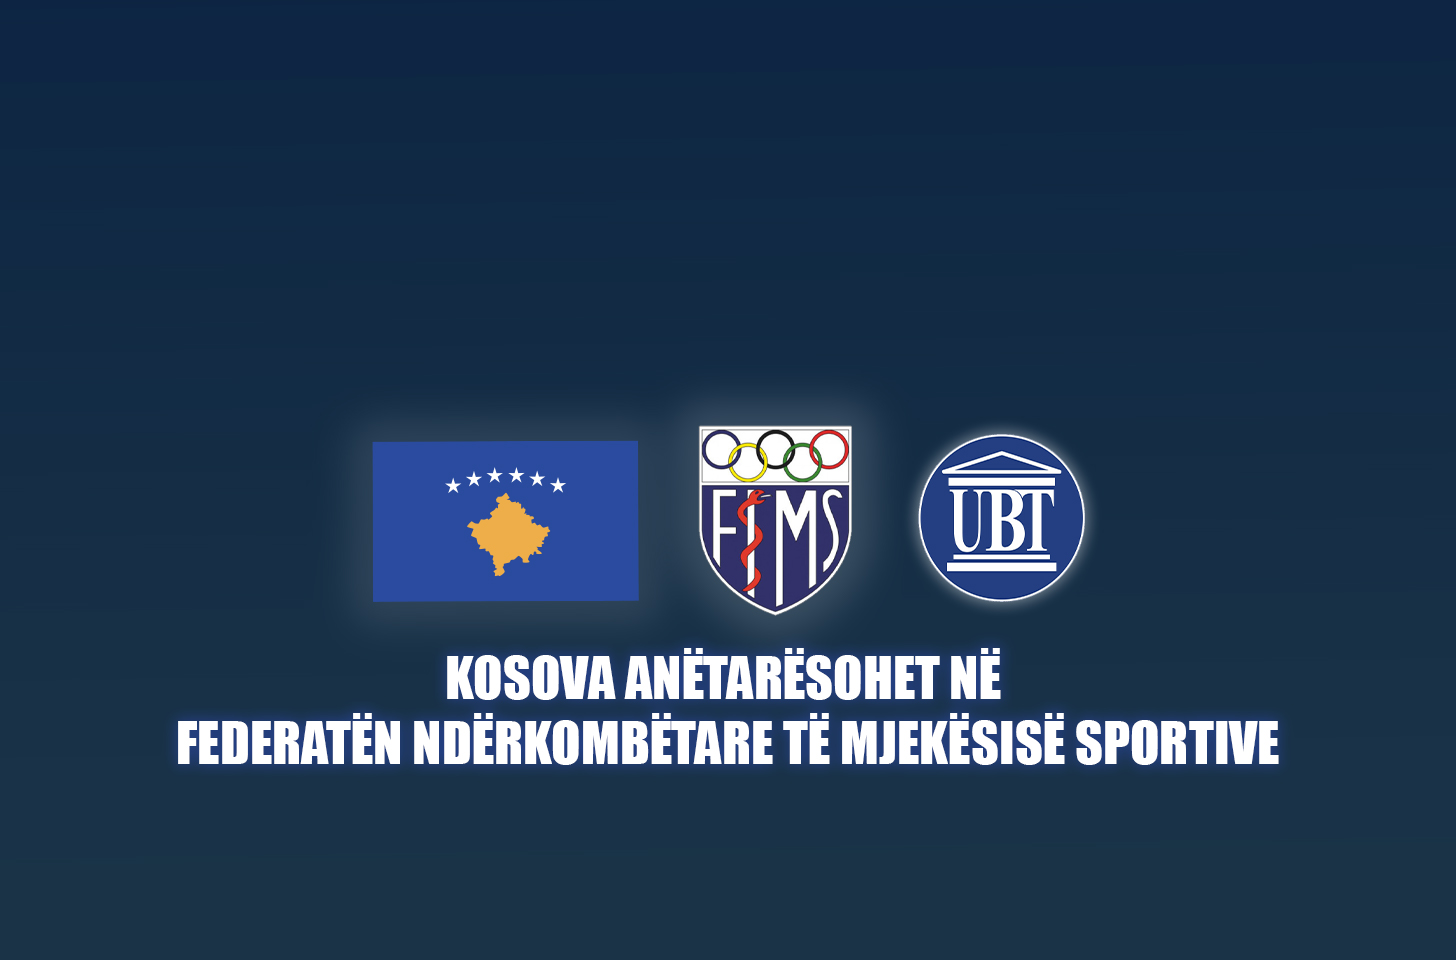 Kosovo joins the International Federation of Sports Medicine